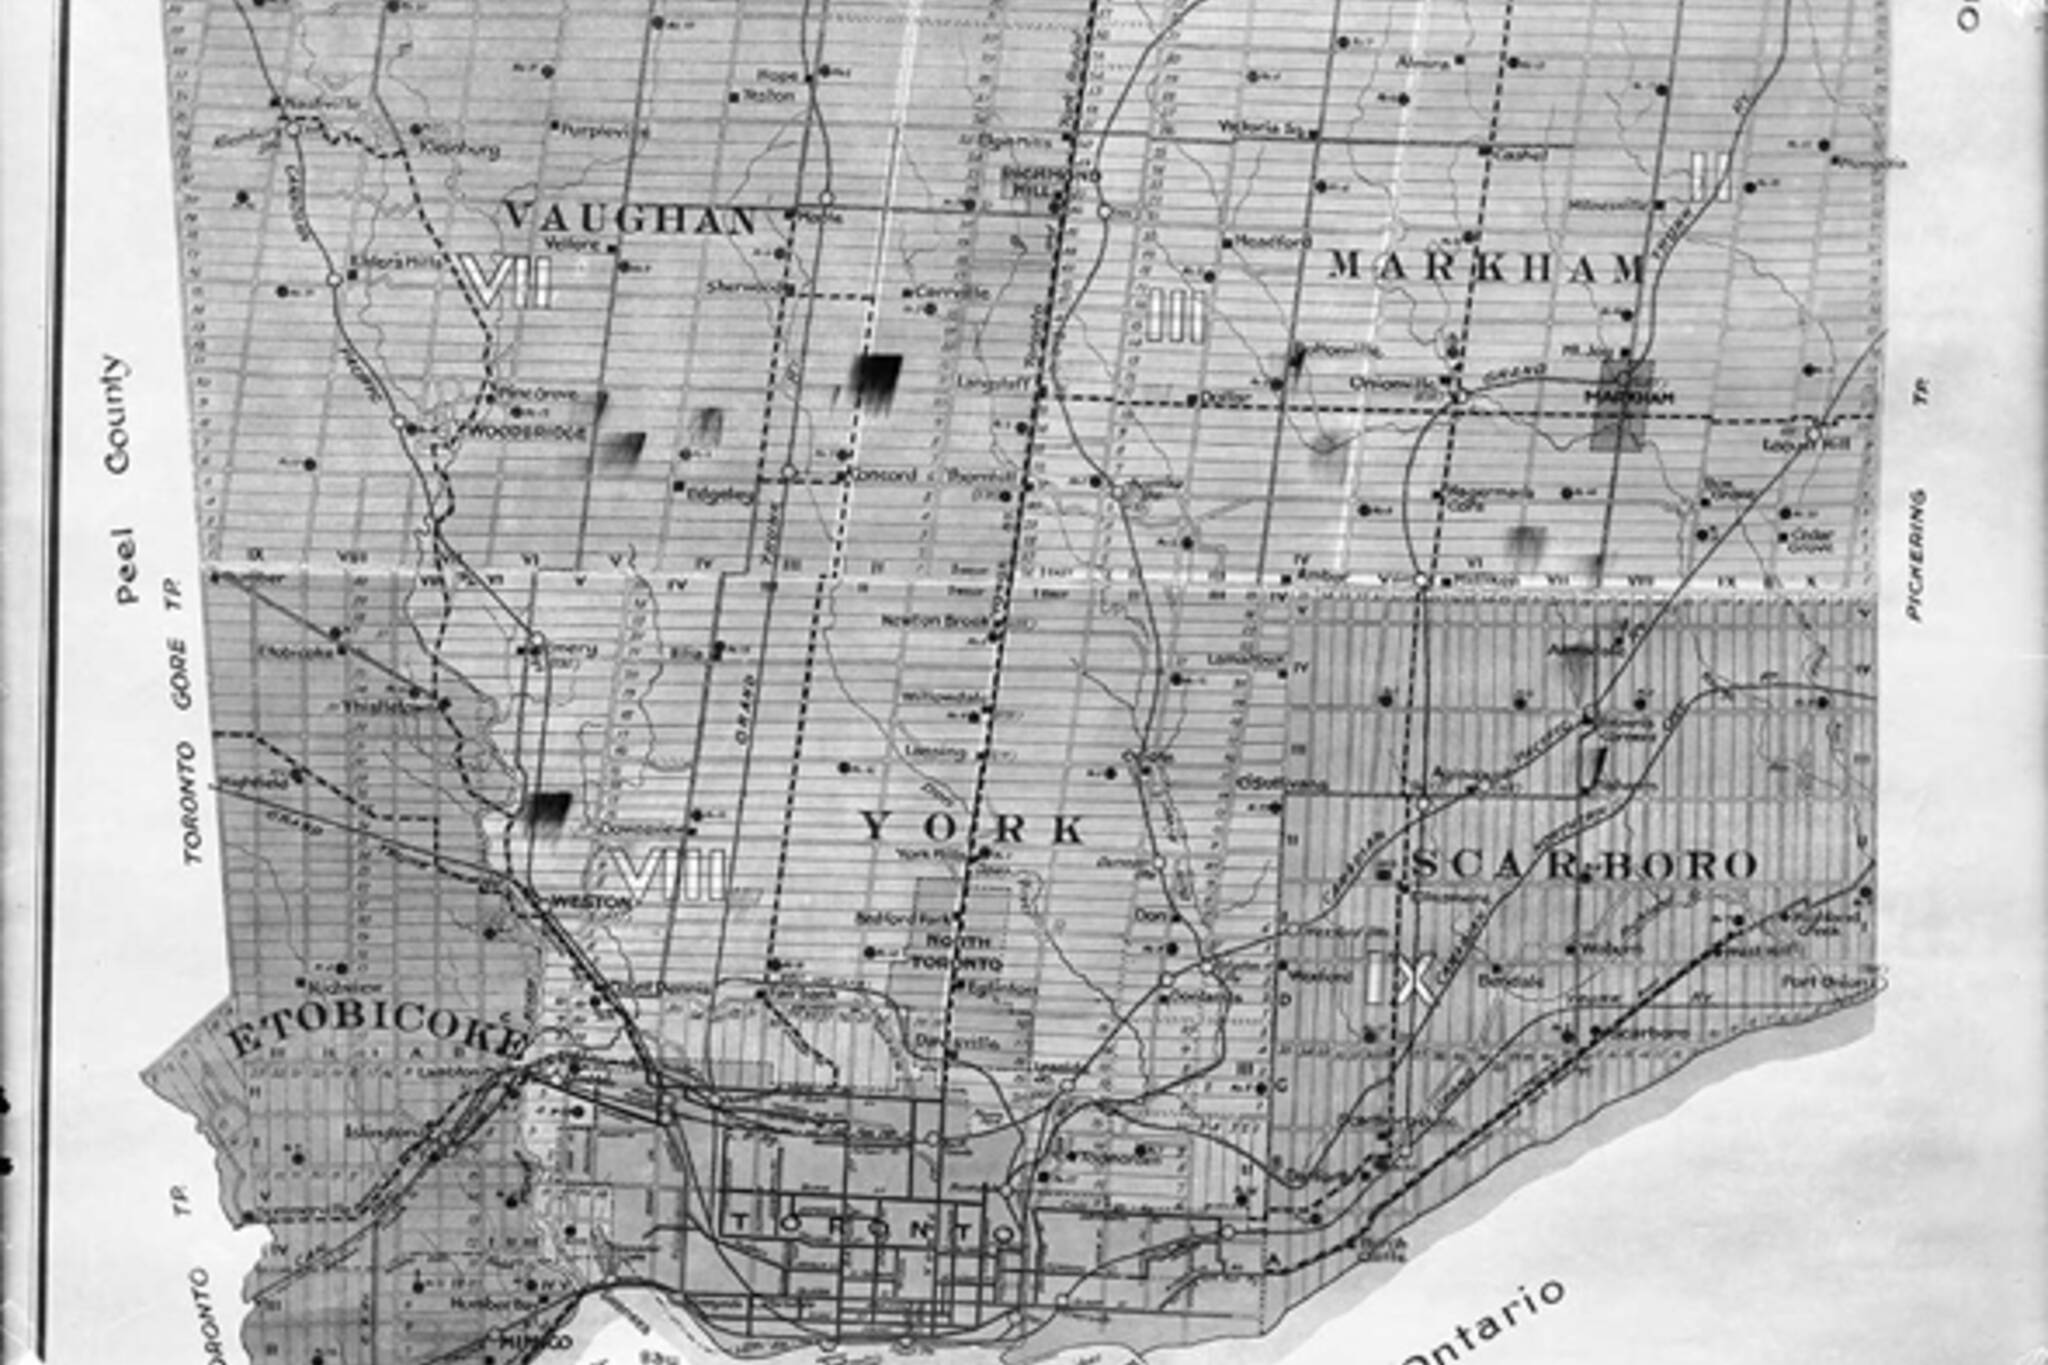 Toronto, history, neighbourhoods, Brockton, Ellesmere, Scarborough, postwar, suburbs, York County